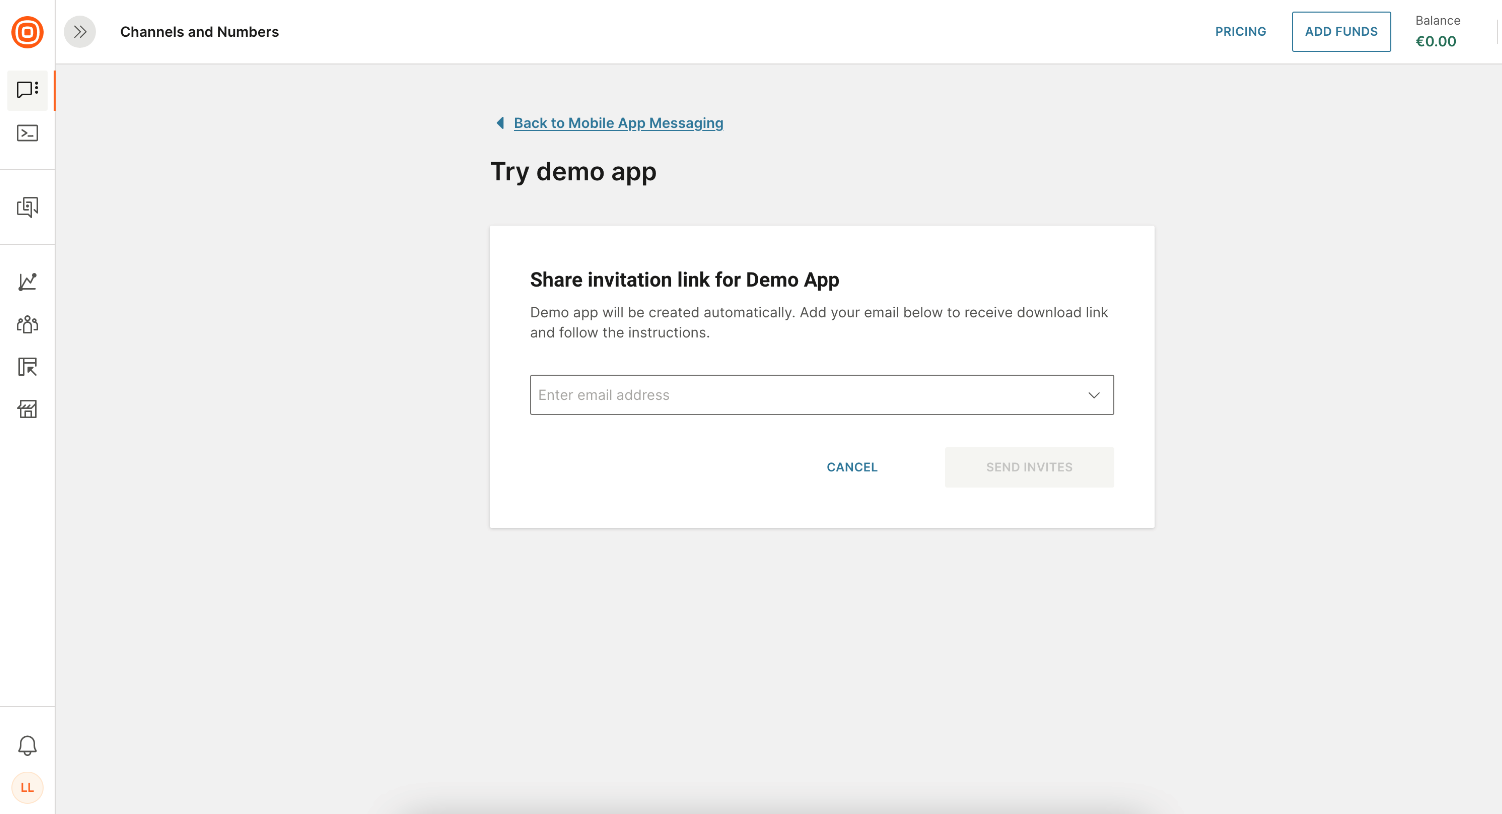 Try demo app mobile app messaging - send invites